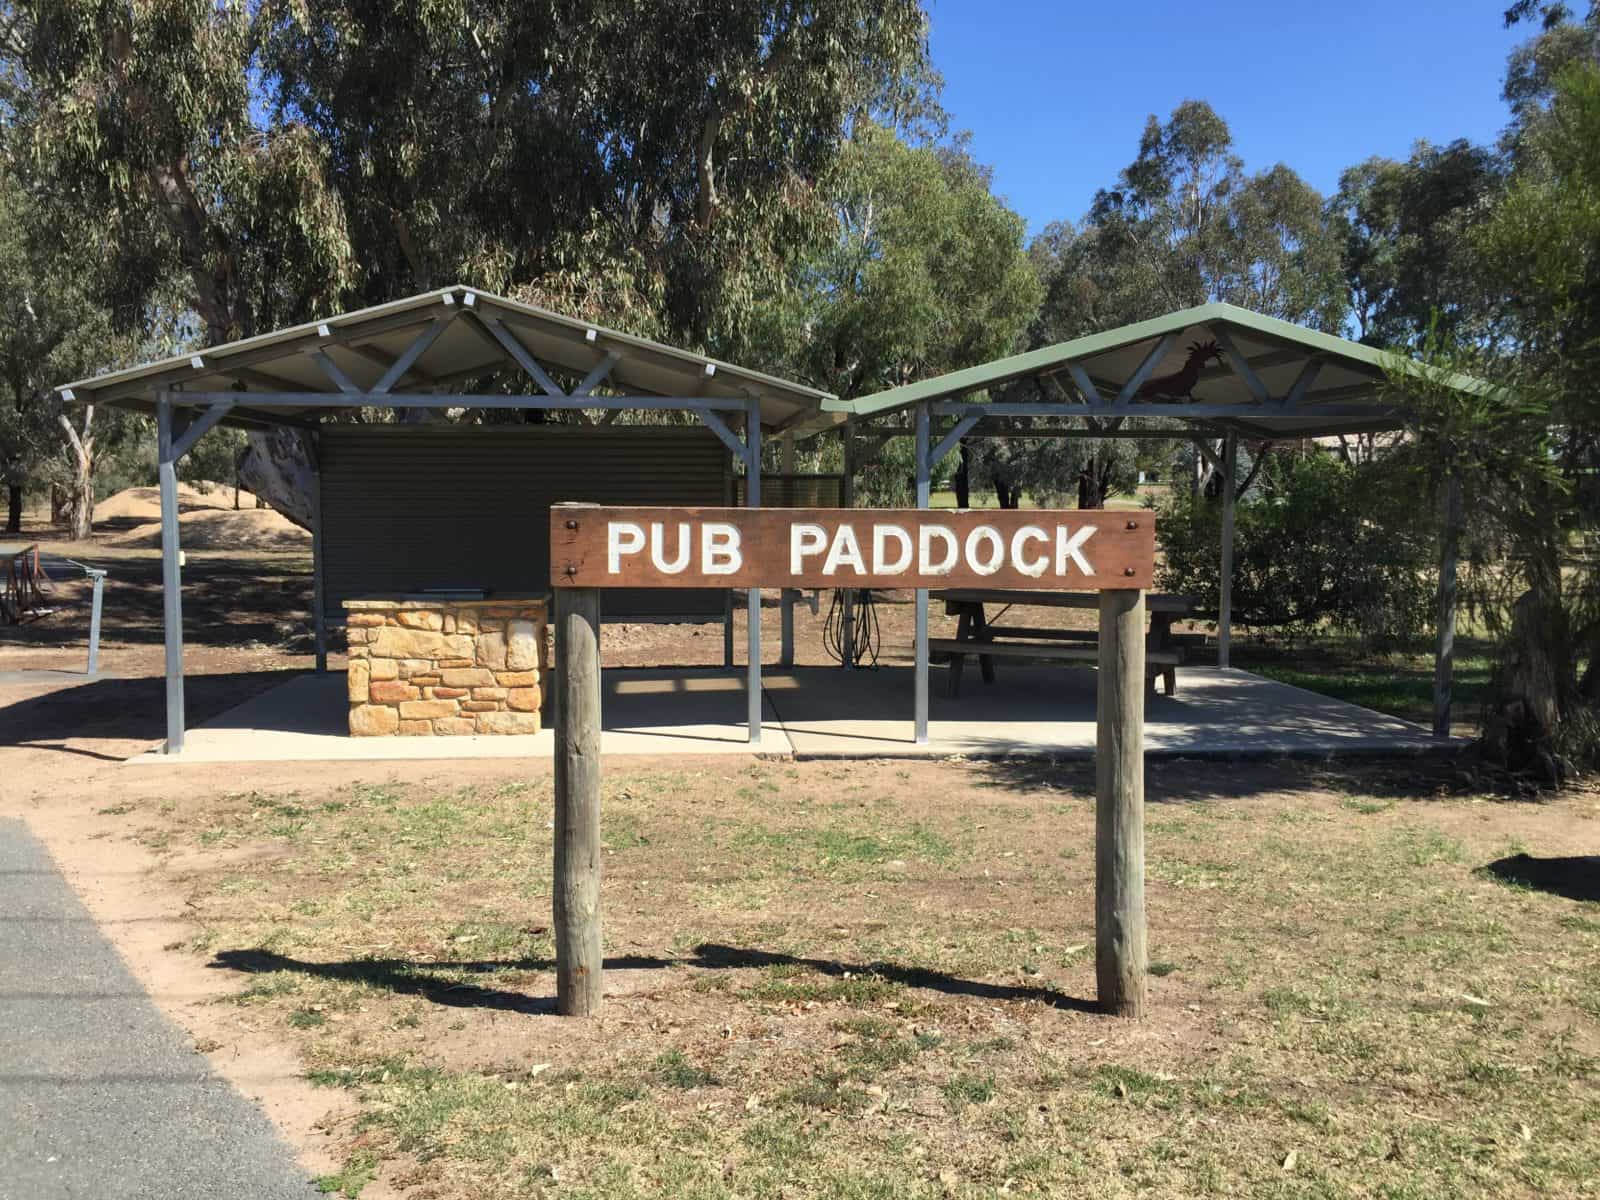 The Pub Paddock